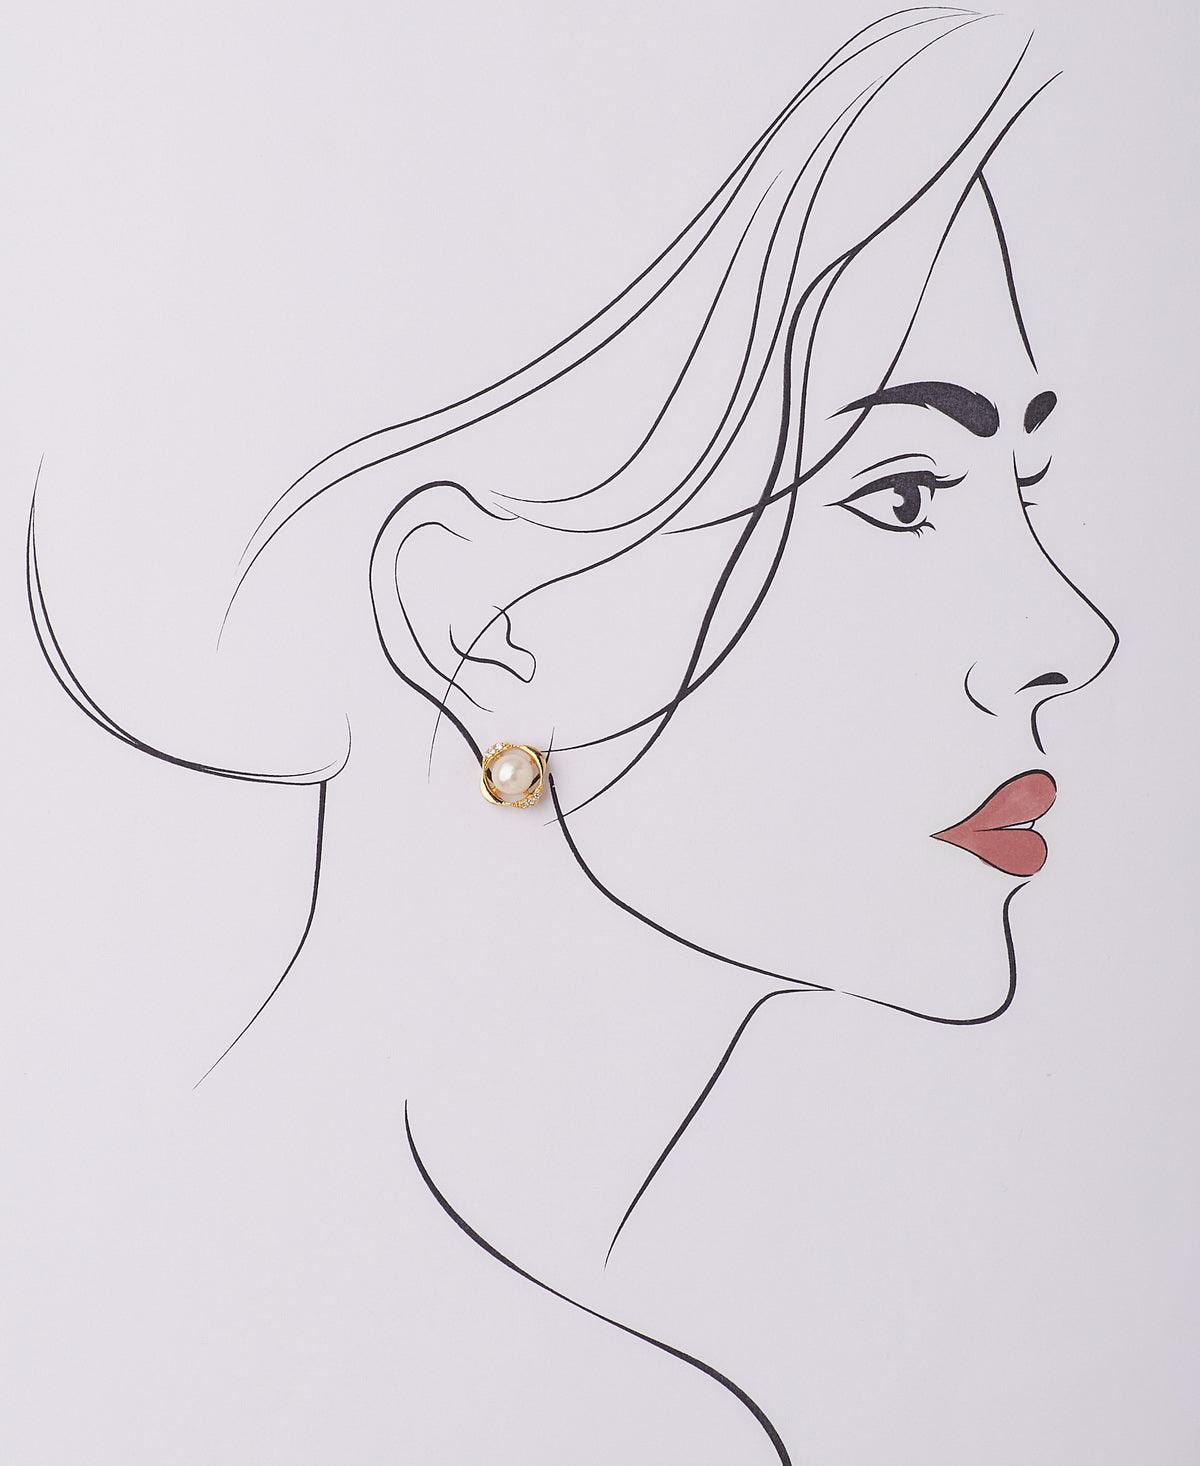 Elegant Real Pearl Hanging Earring - Chandrani Pearls